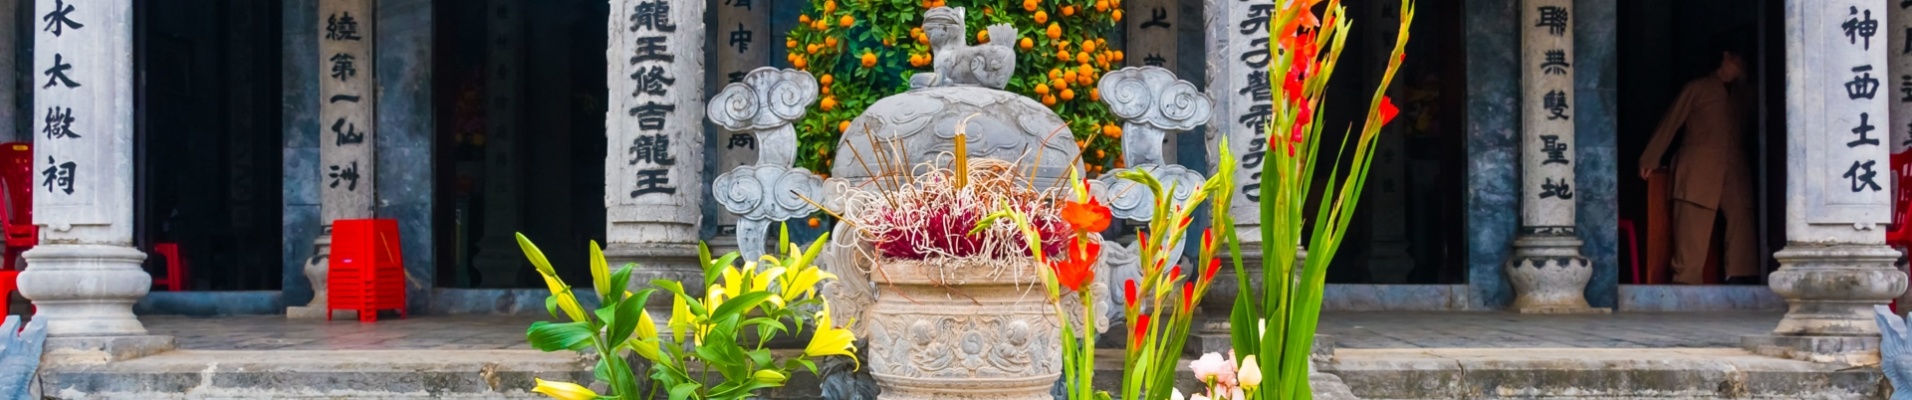 Temple Thai Vi, Ninh Binh